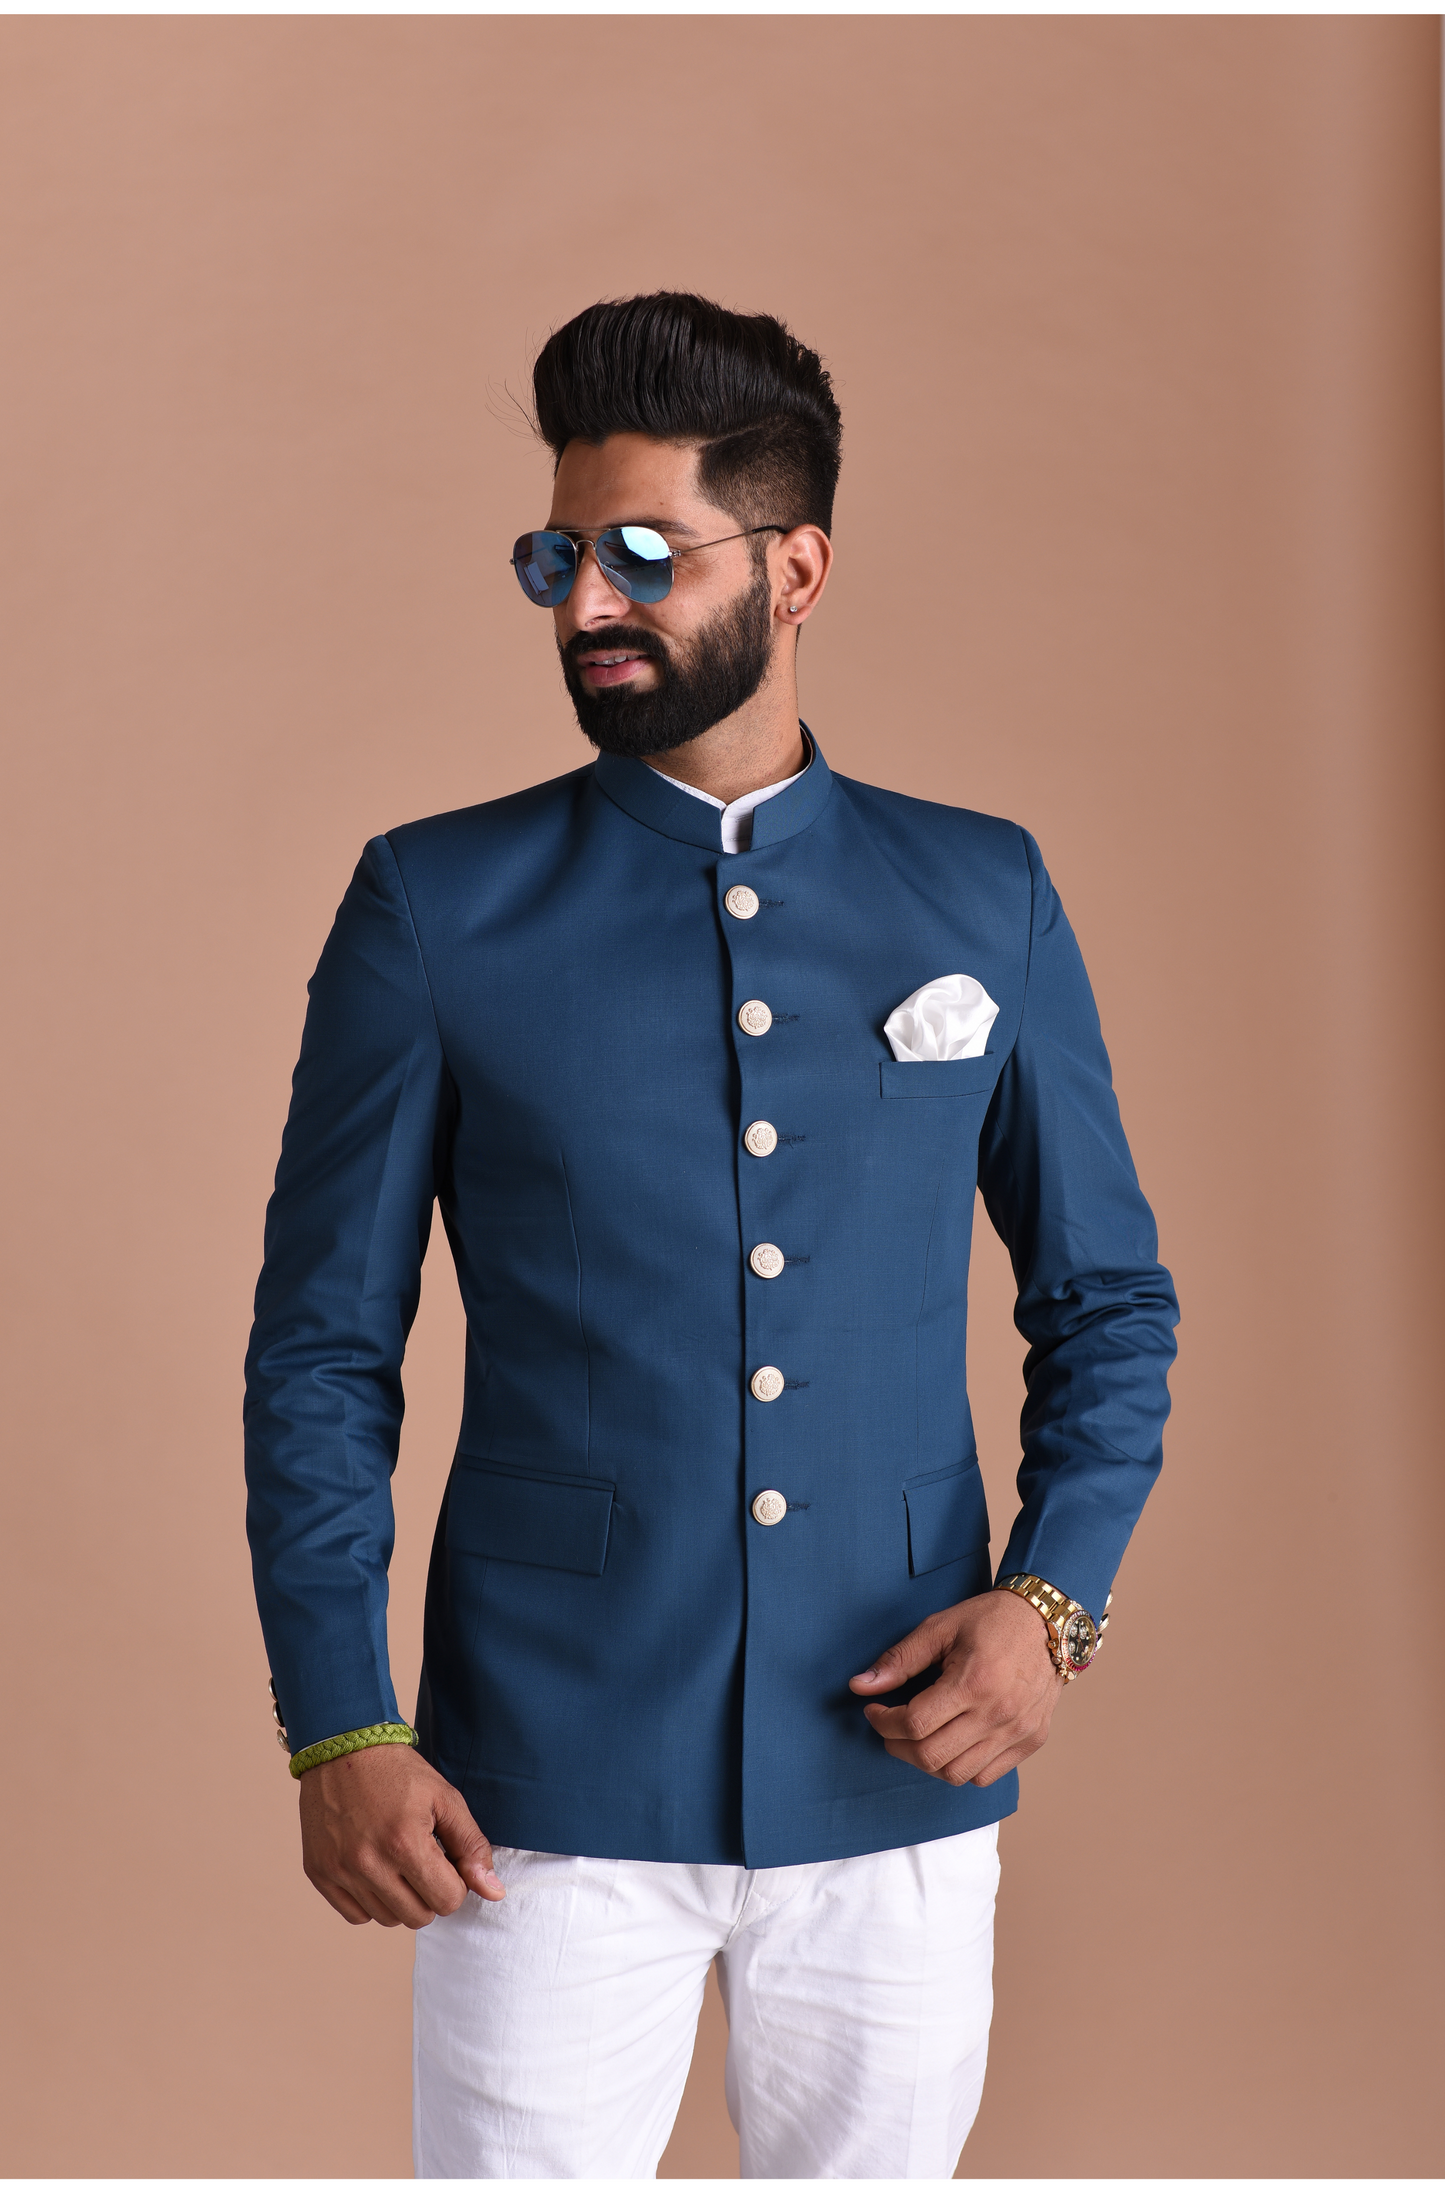 Teal Blue Jodhpuri Bandhgala Suit With White Trouser